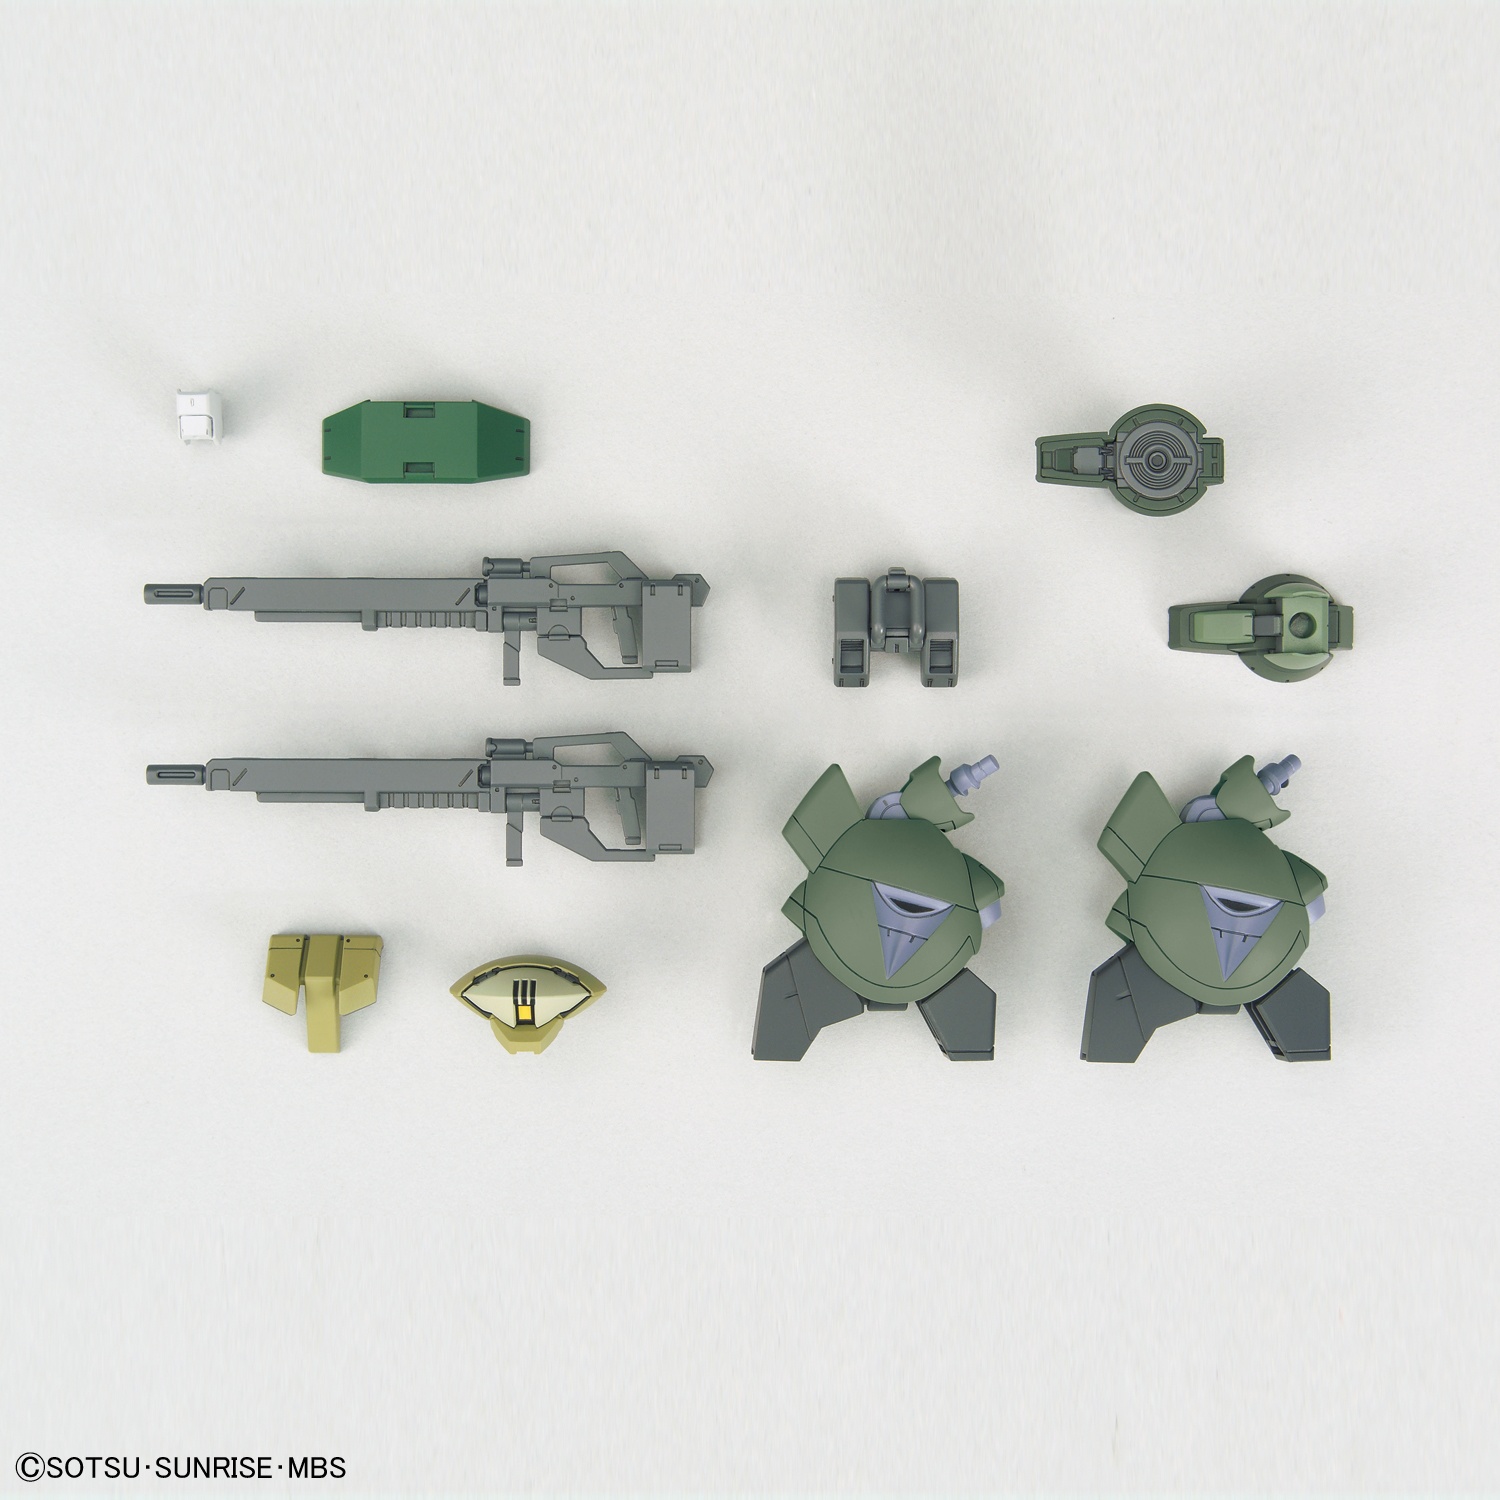 Bandai Iron-Blooded Orphans 009 Gundam MAN RODI 1/144 scale kit 